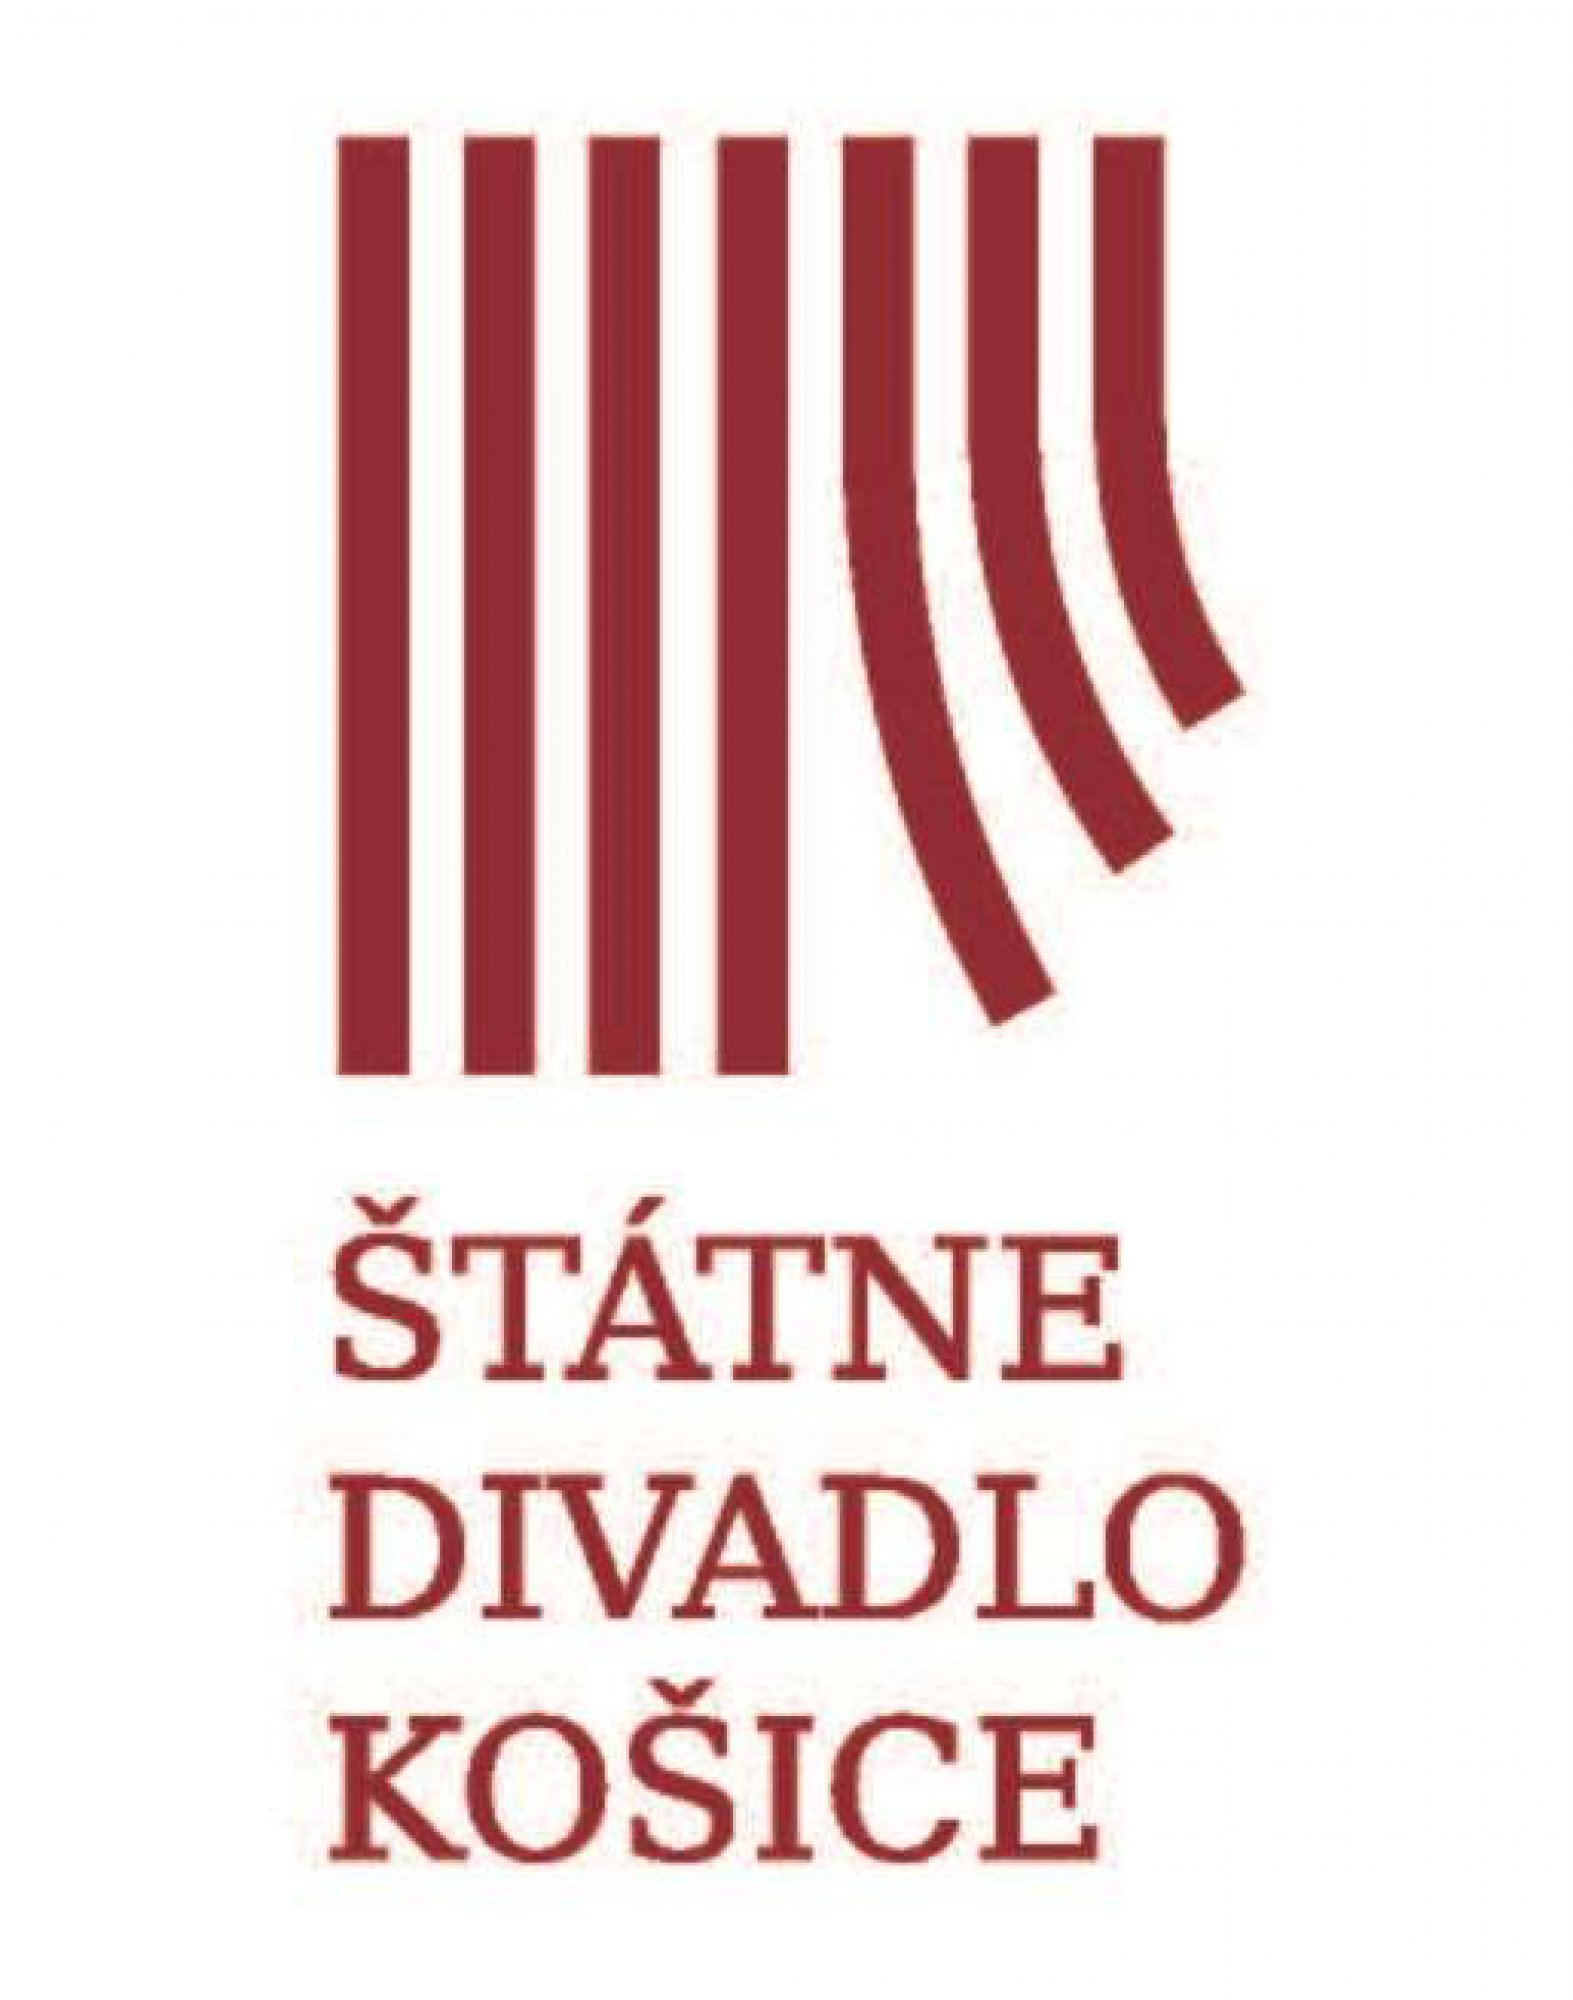 Štátne divadlo Košice logo a